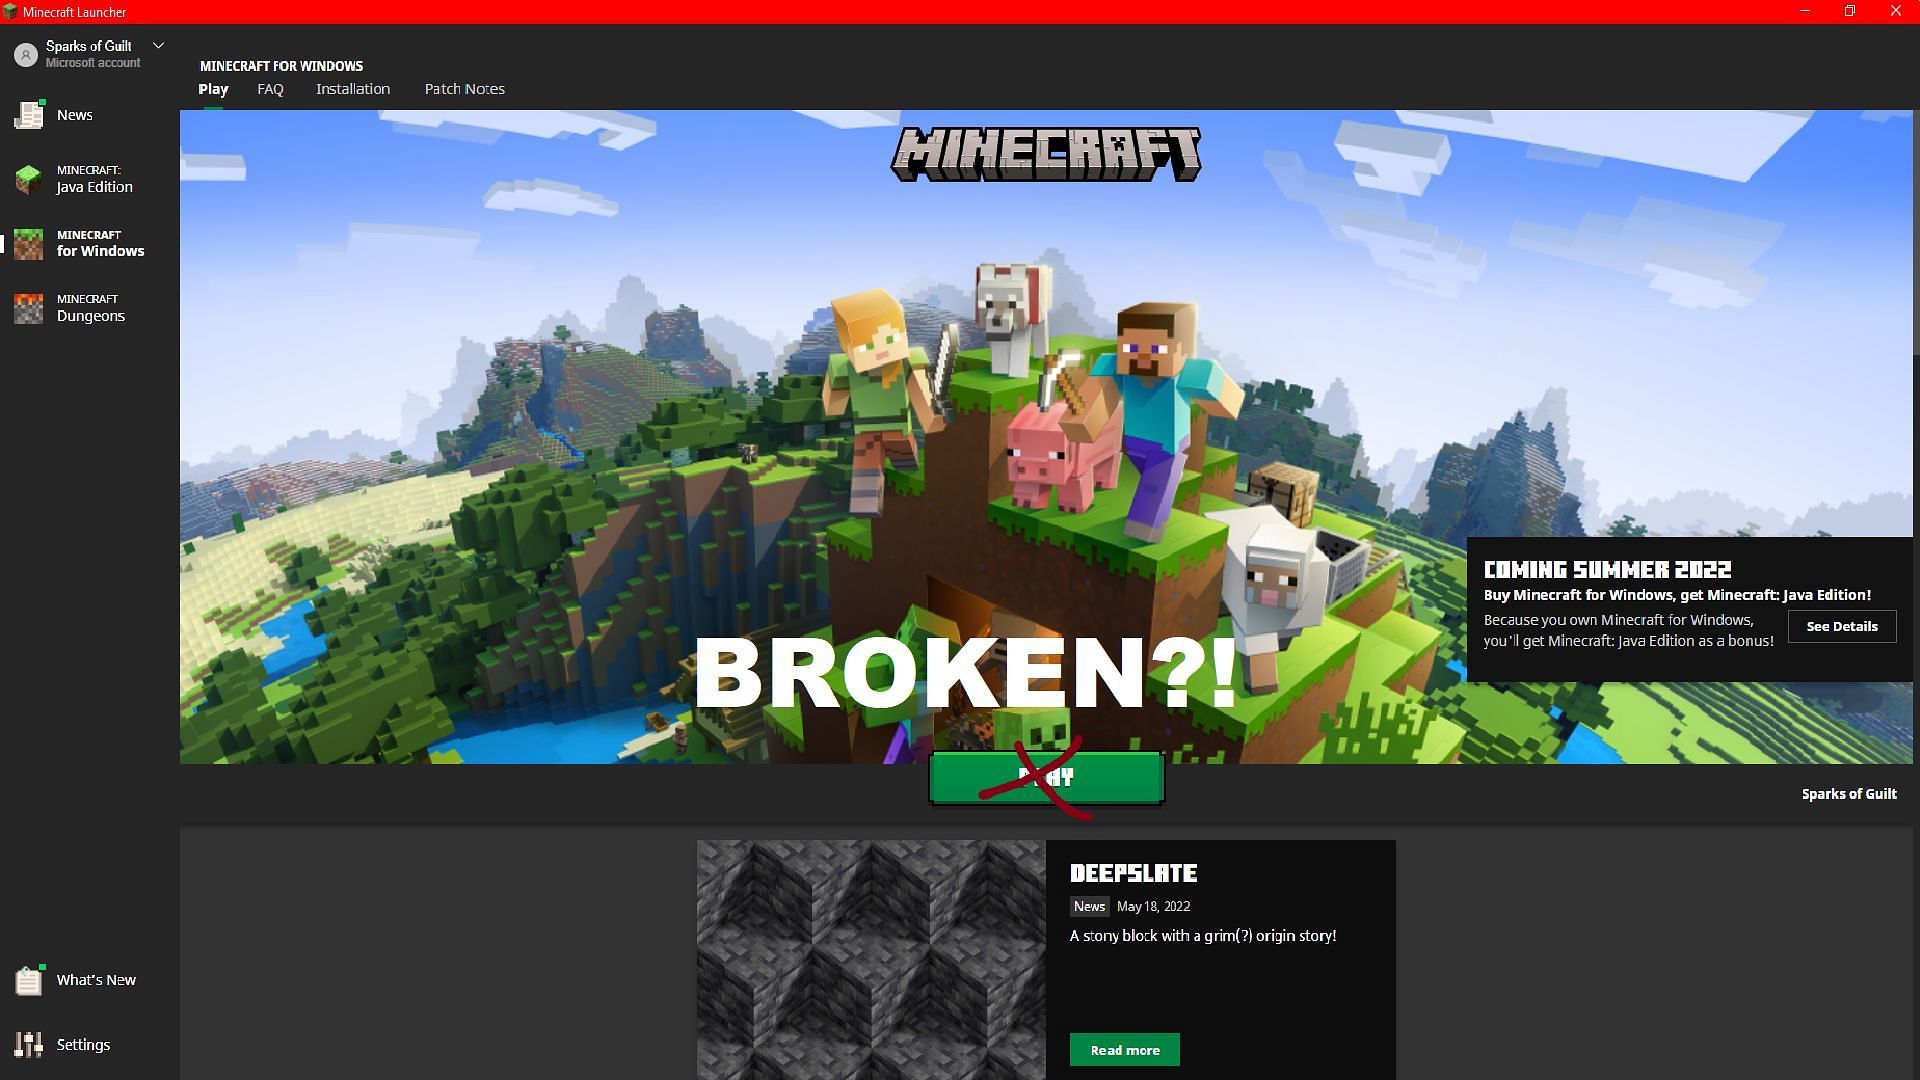 The Minecraft Bedrock Edition launch screen (Image via Minecraft launcher)